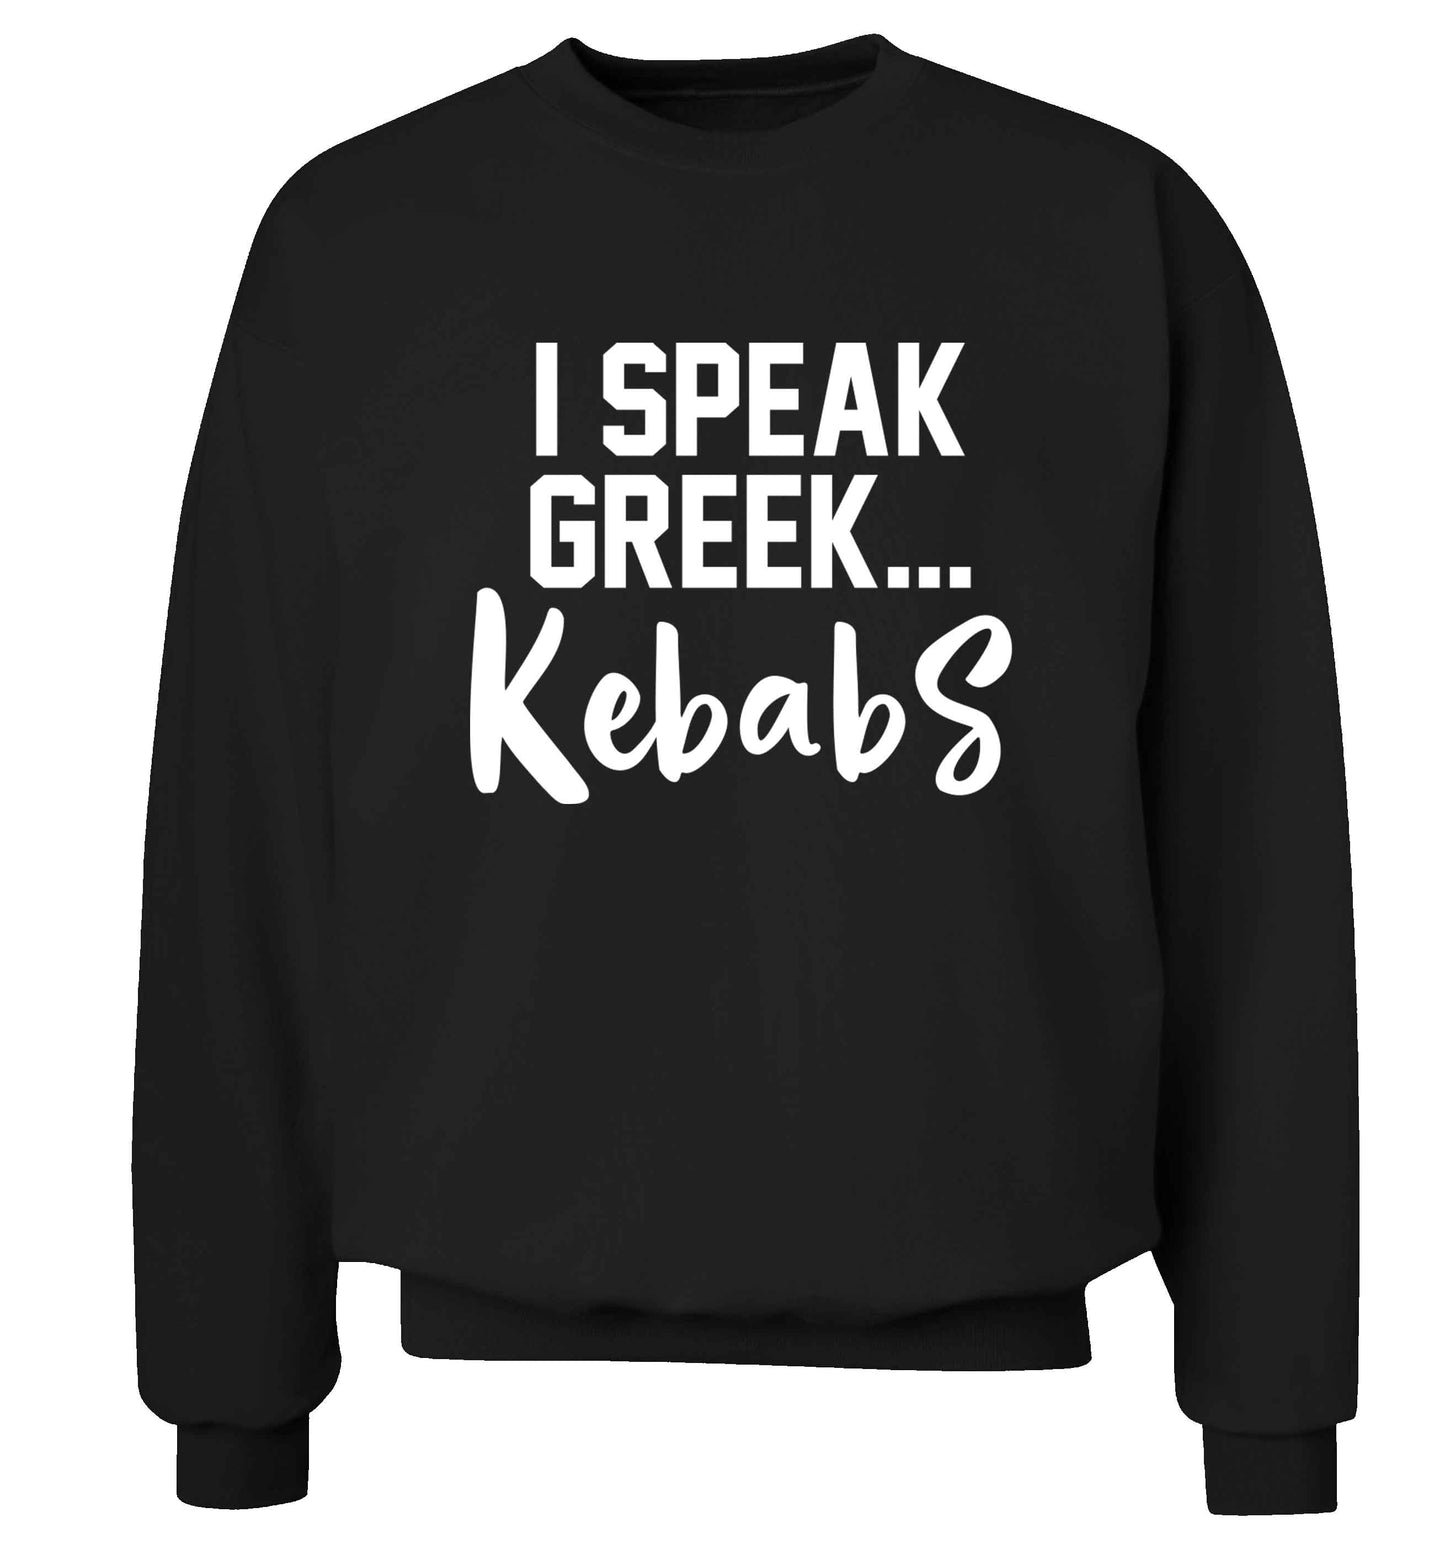 I speak Greek...kebabs Adult's unisex black Sweater 2XL